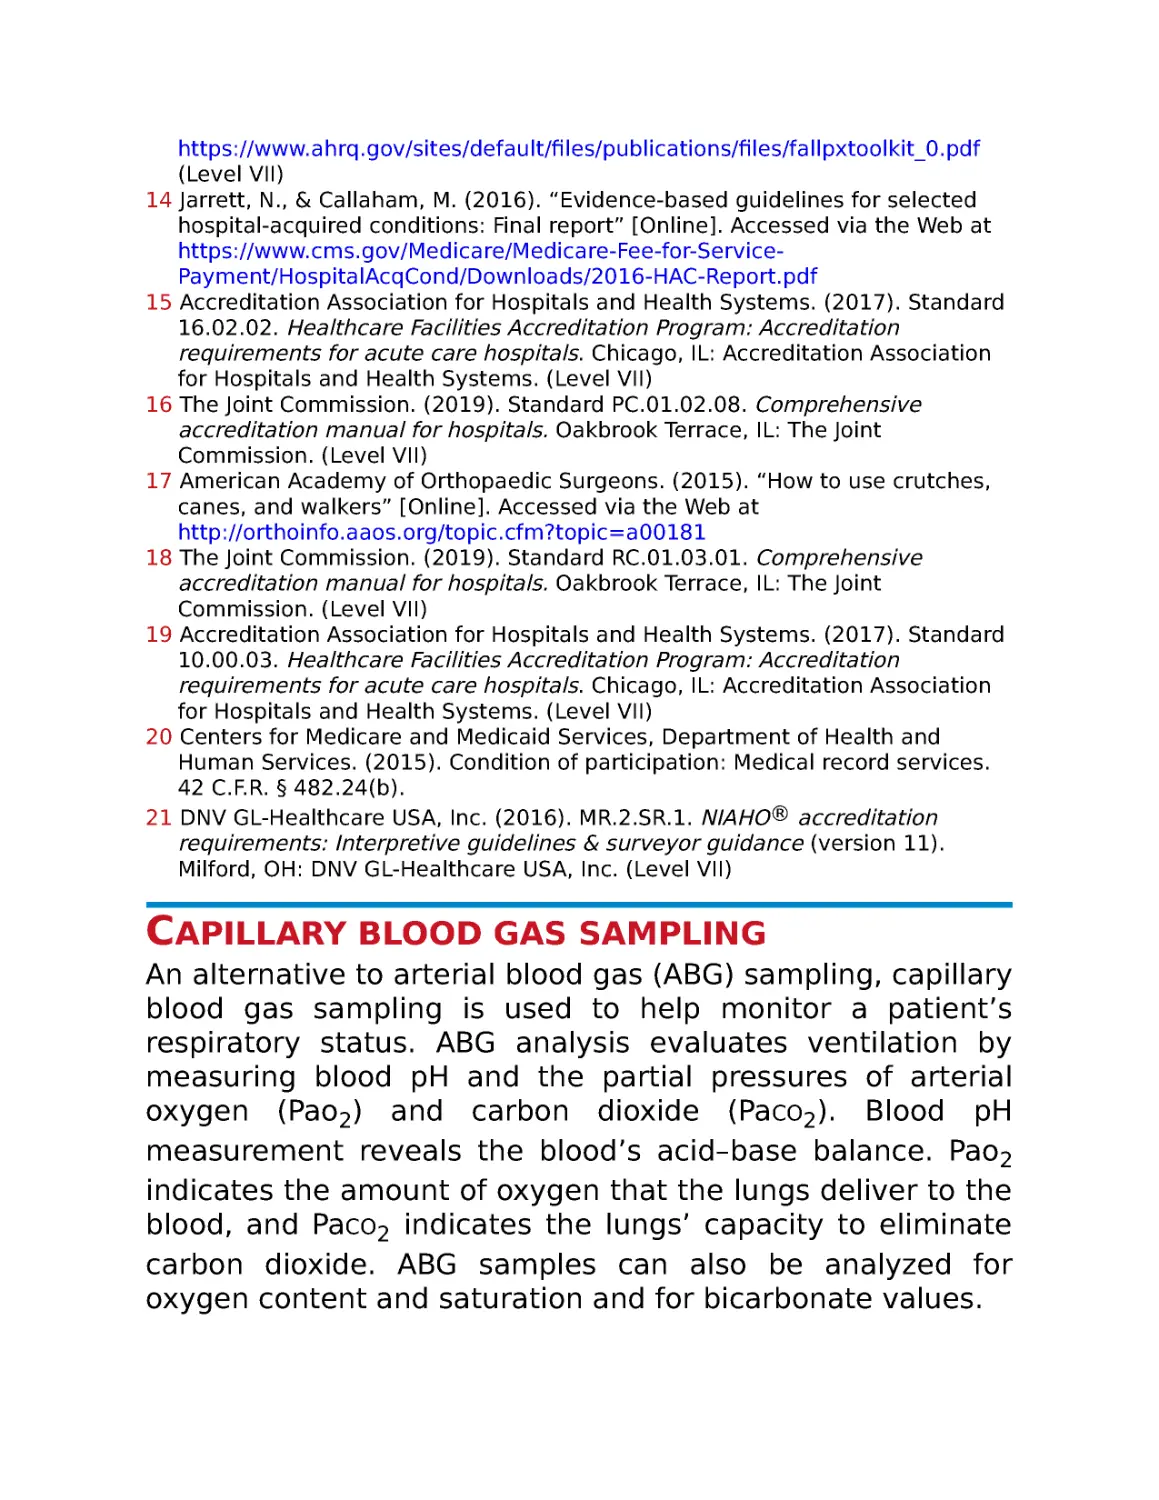 Capillary blood gas sampling